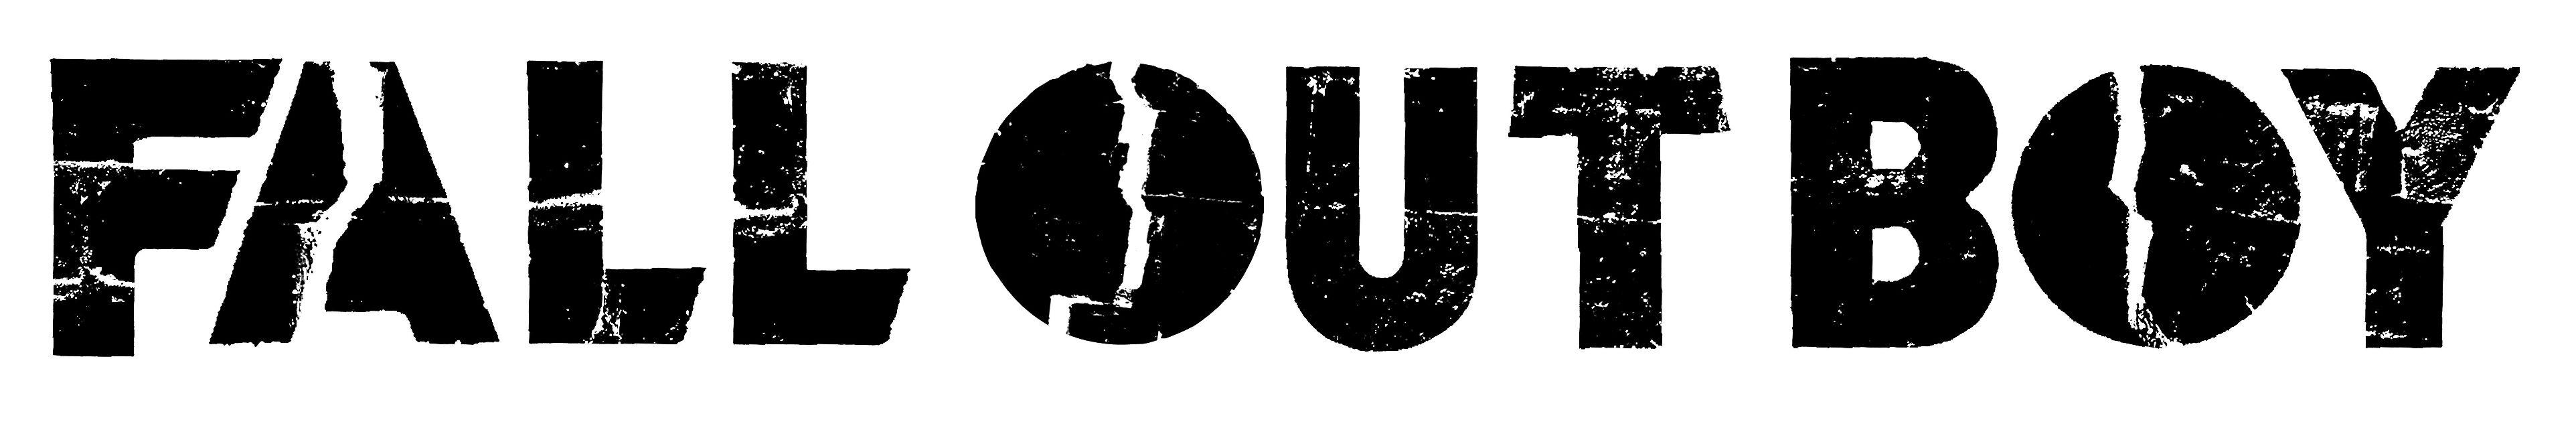 FOB Fall Out Boy Logo - Fall out boy Logos